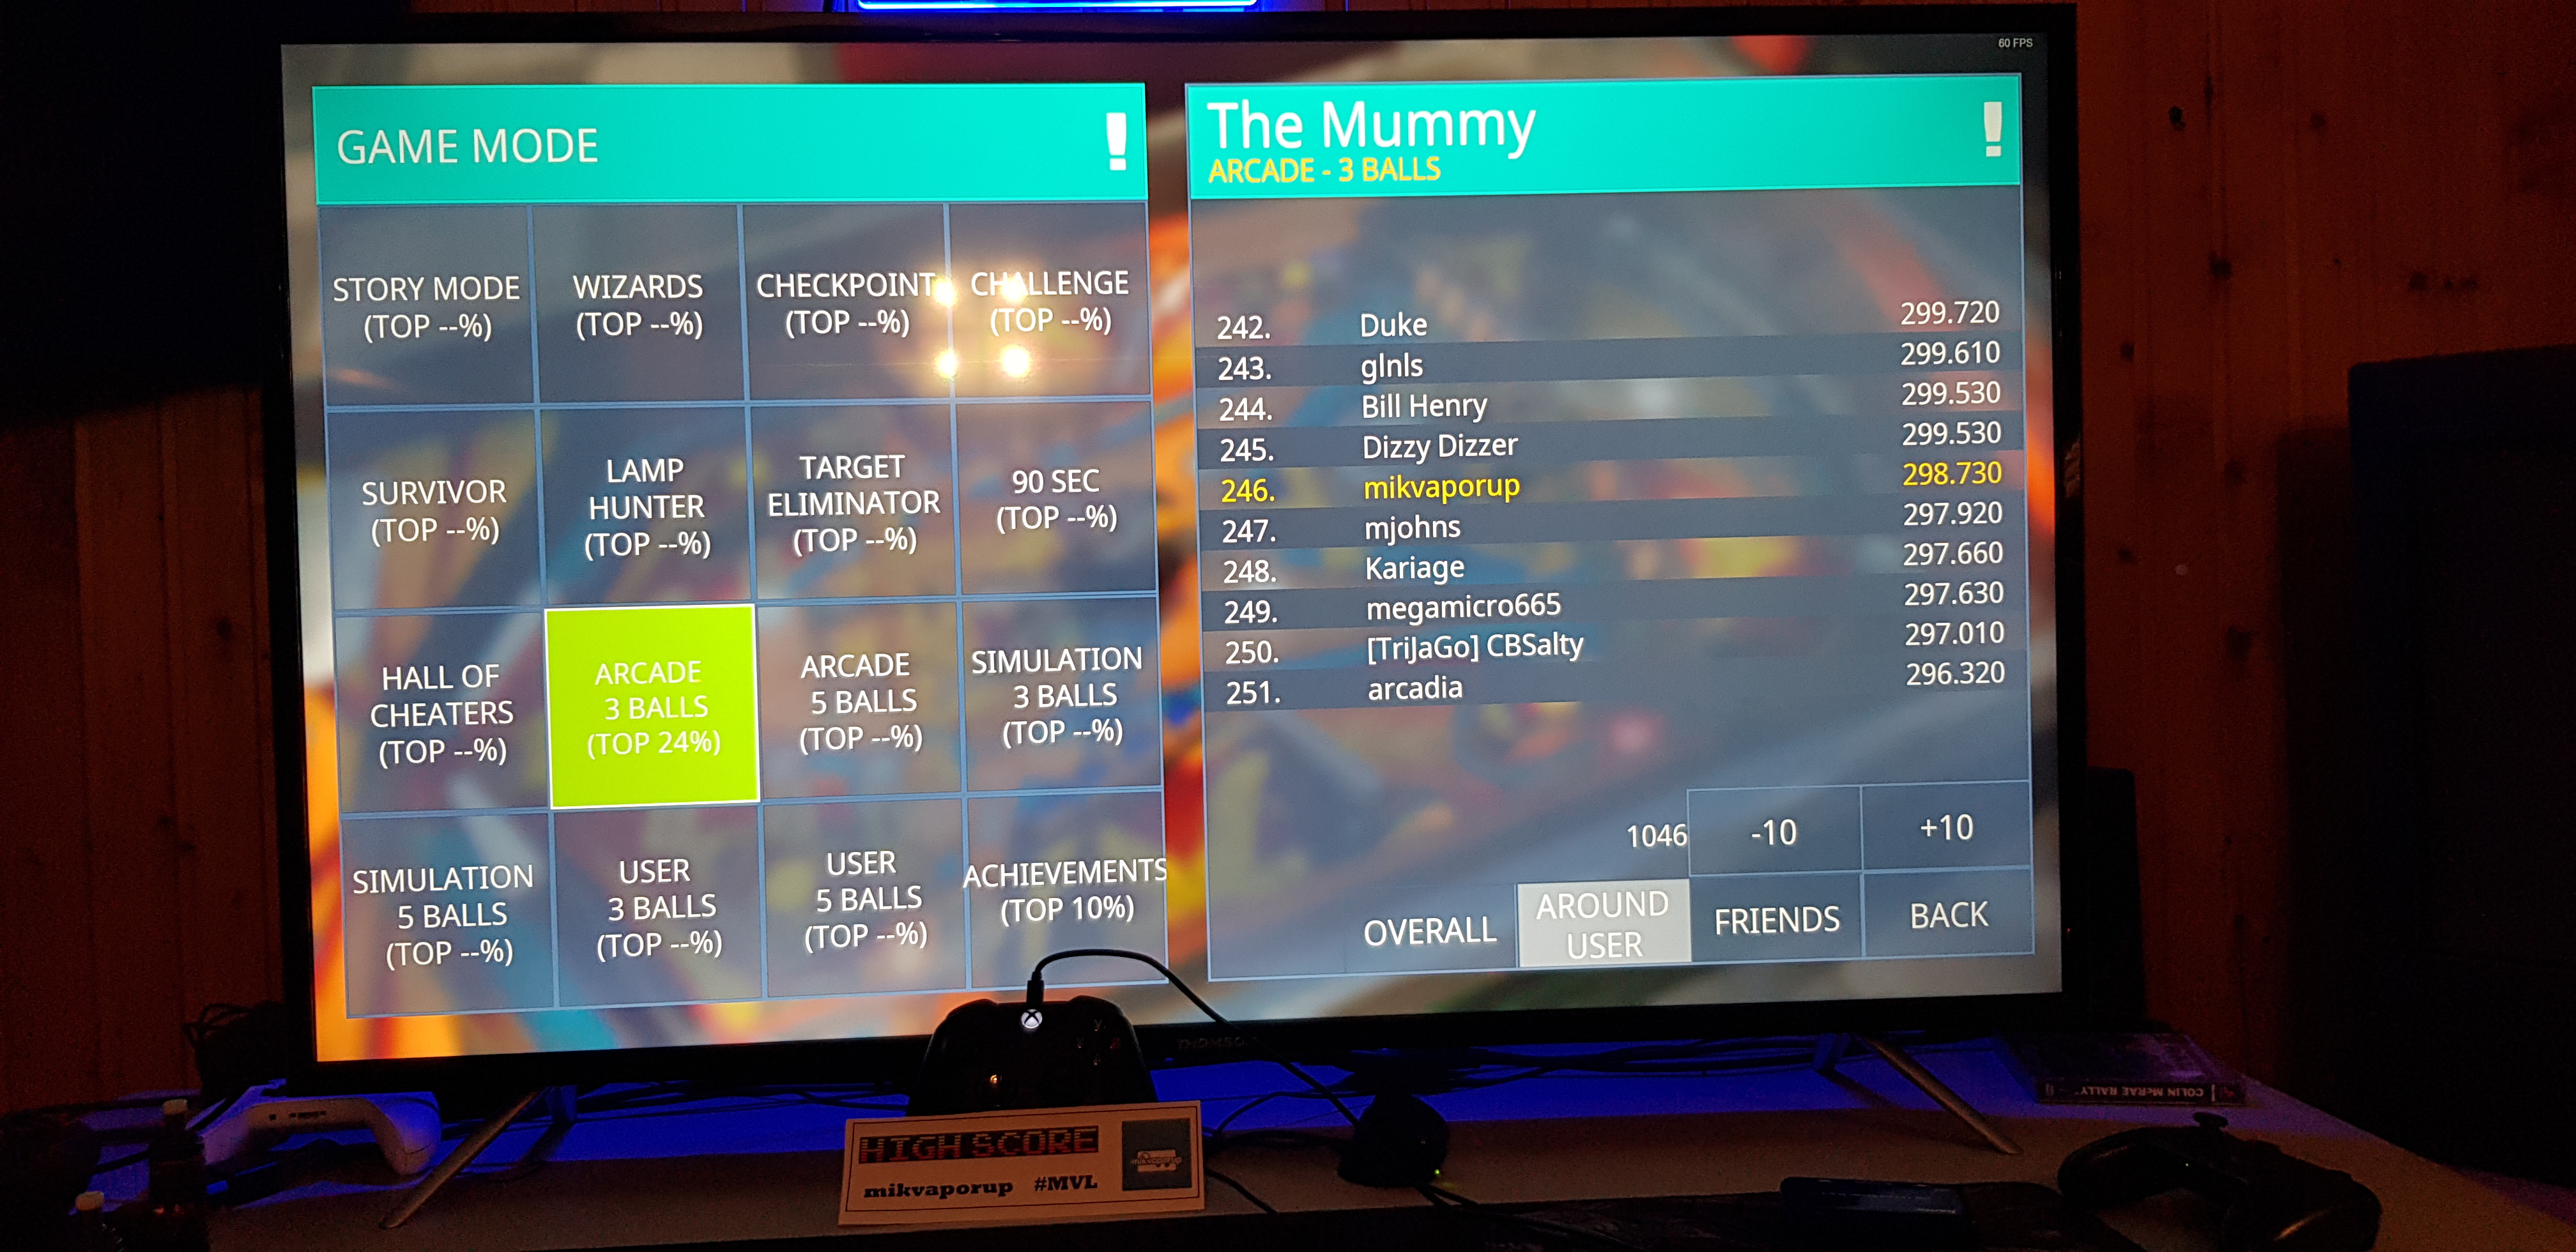 mikvaporup: Zaccaria Pinball: The Mummy [3 balls] (PC) 298,730 points on 2019-11-02 11:47:04